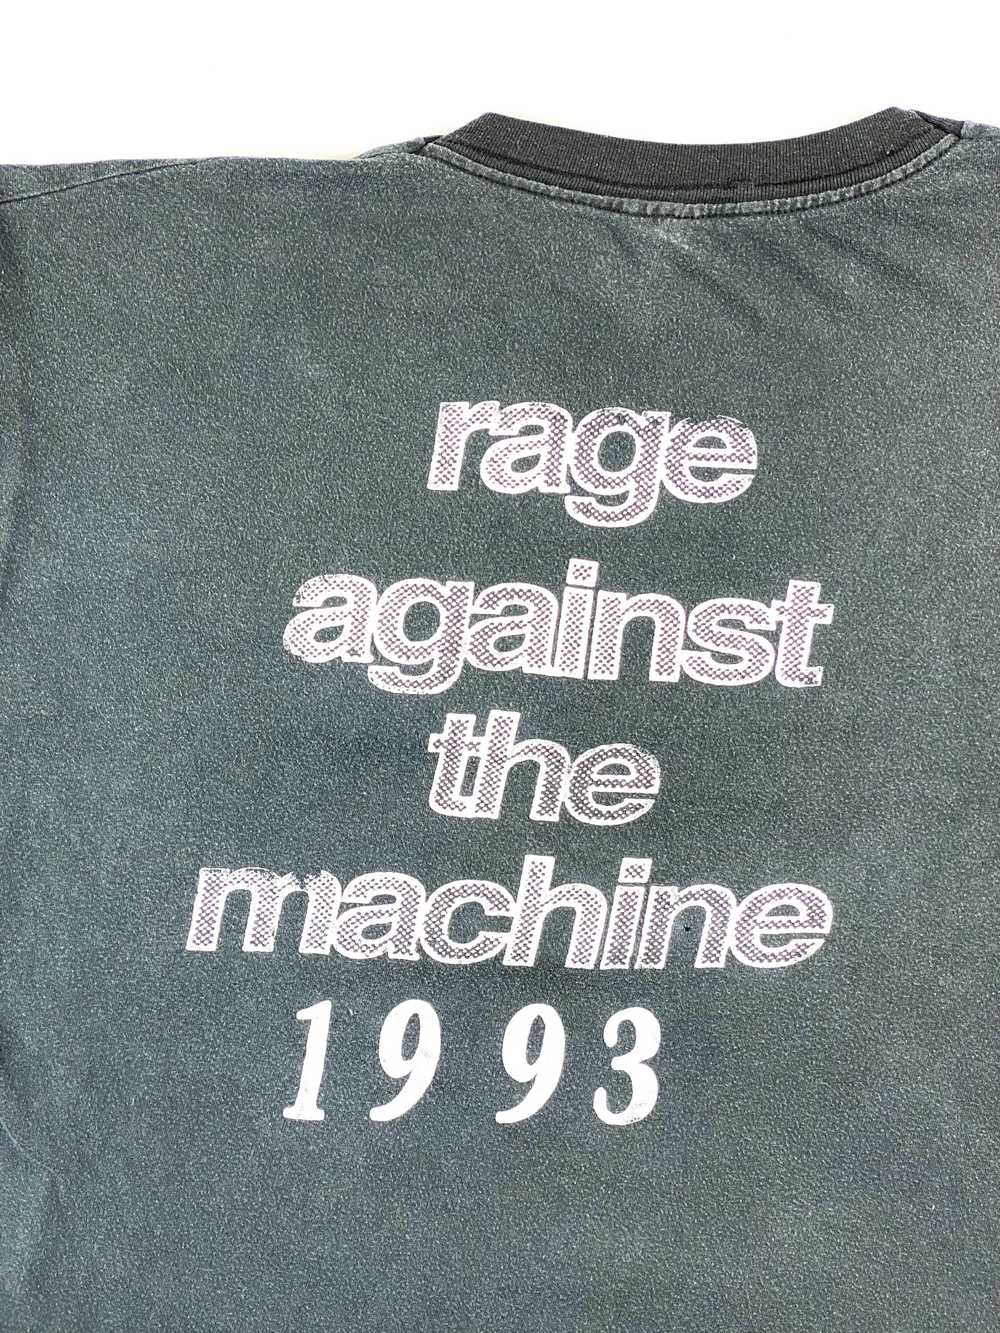 1993 Rage Against The Machine Tee Shirt - image 5